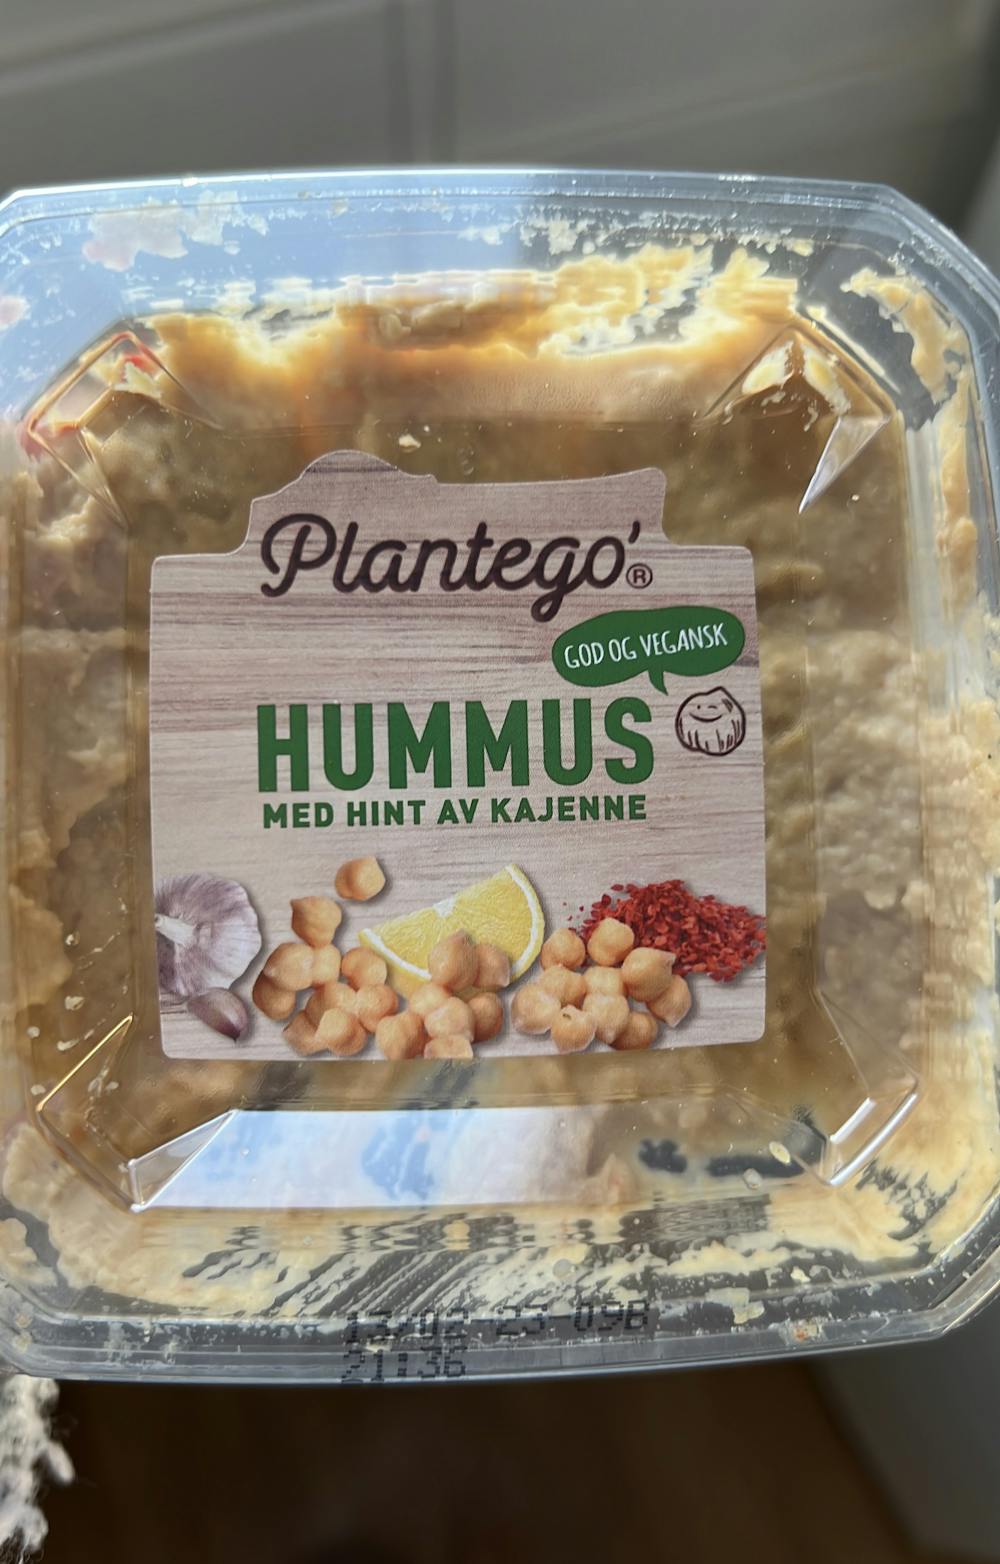 Hummus med hint av kajenne, Plantego’